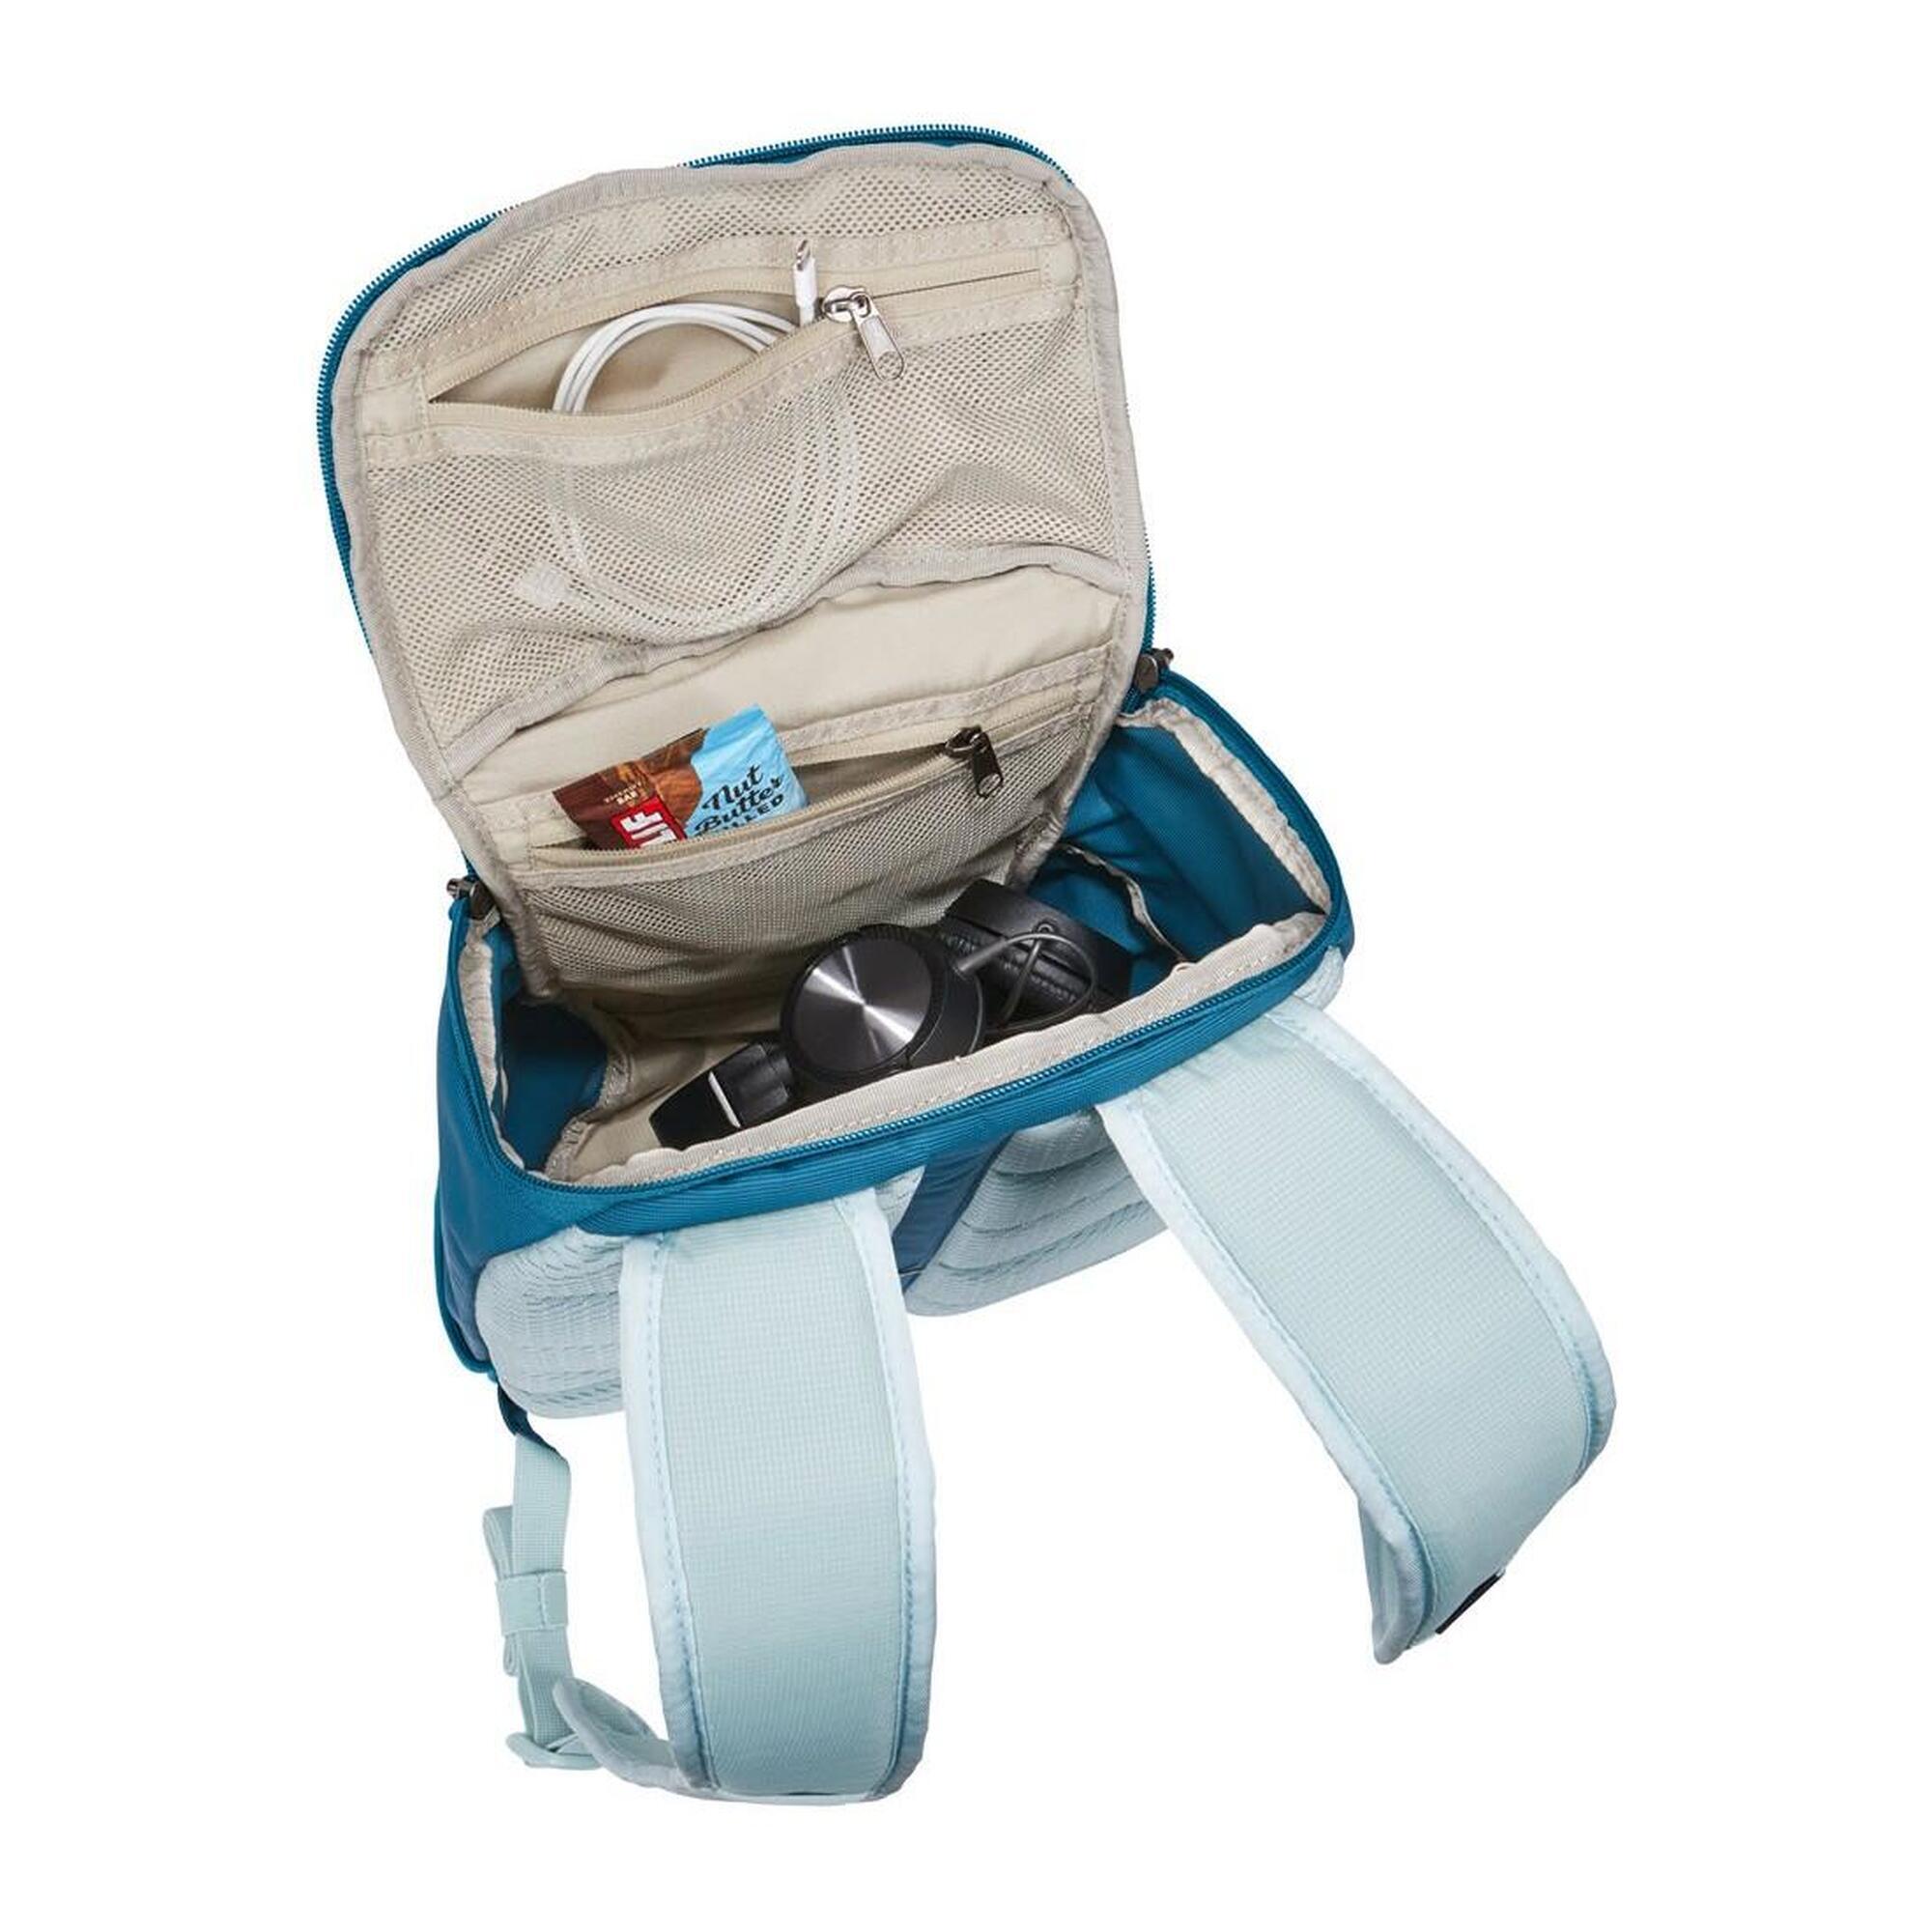 EnRoute Unisex Everyday Backpack 14L - Deep Teal